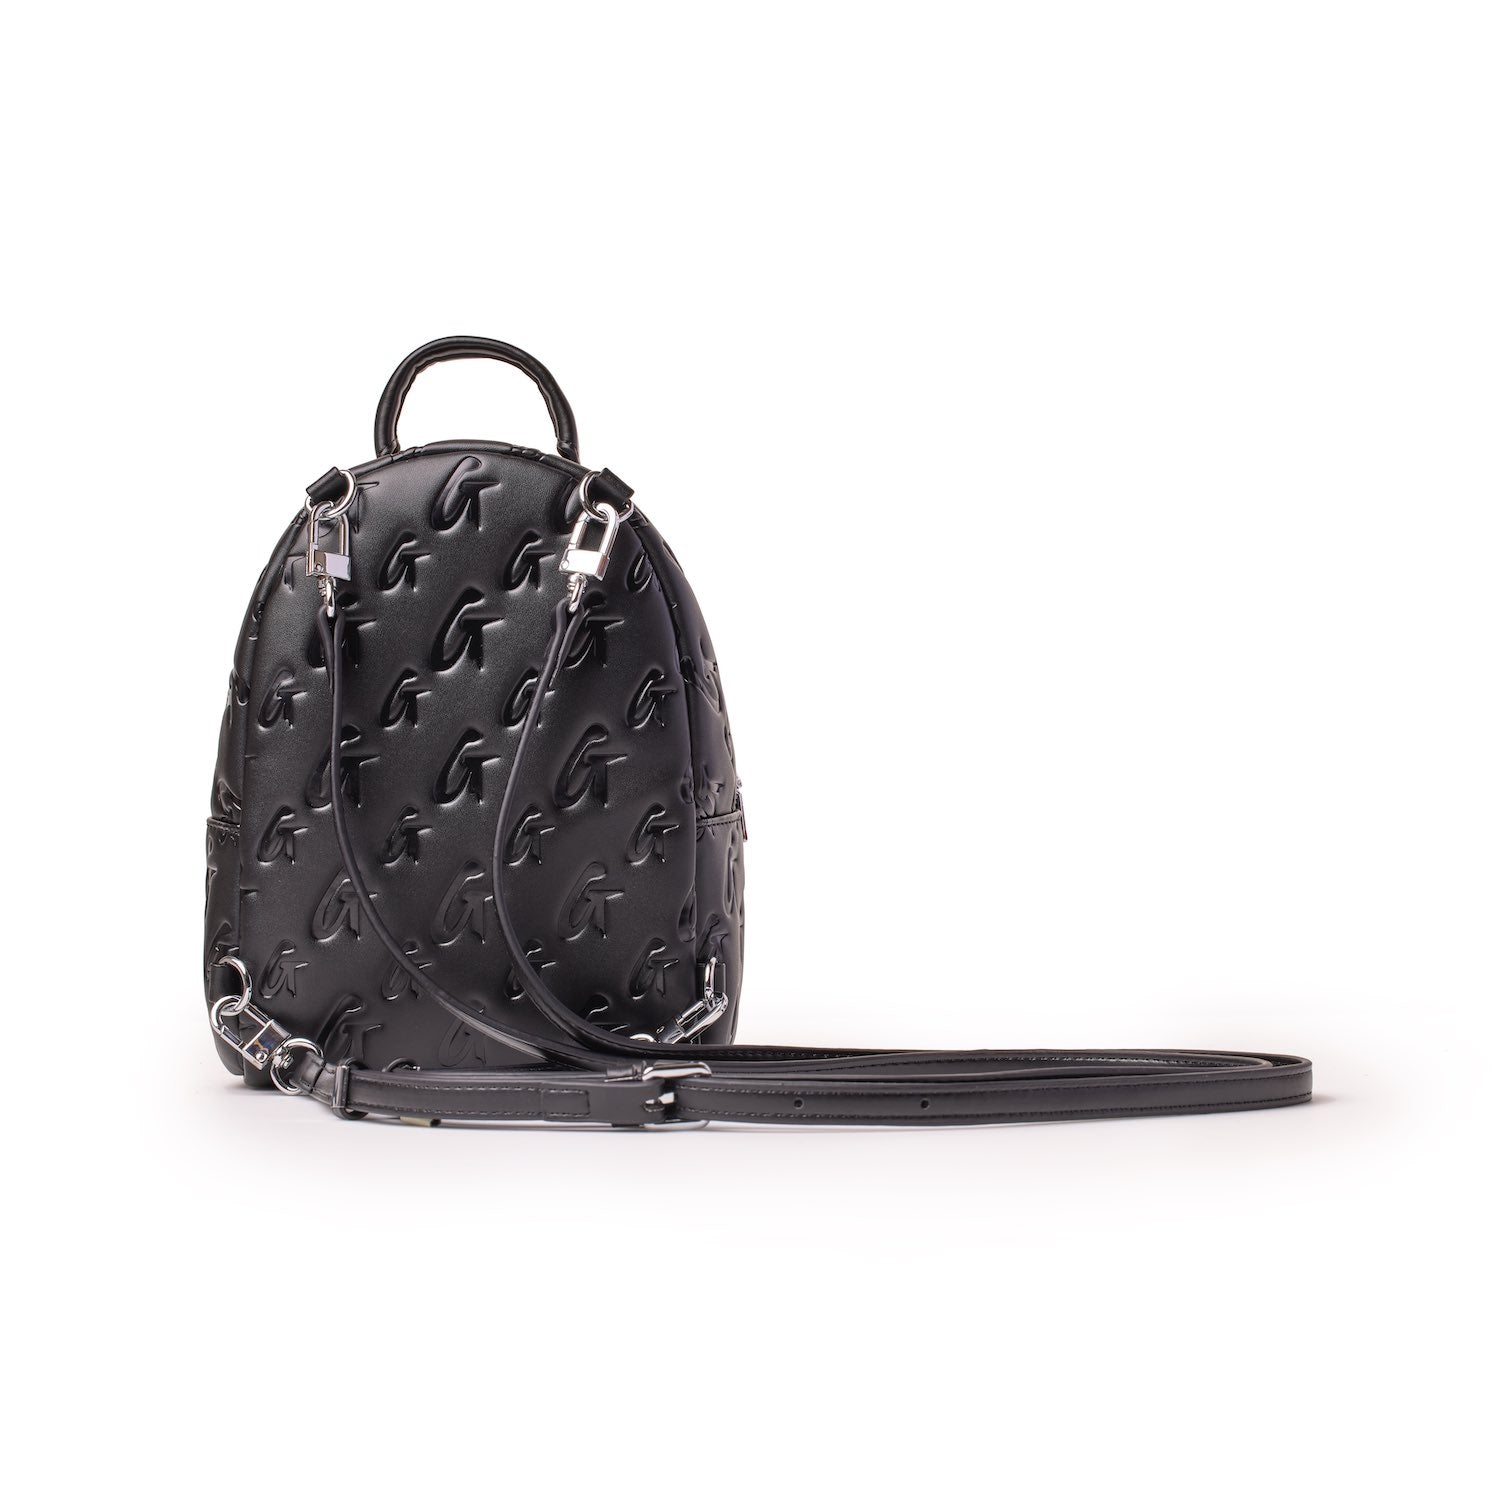 Glam Black Mini Trunk Handbag Paoli